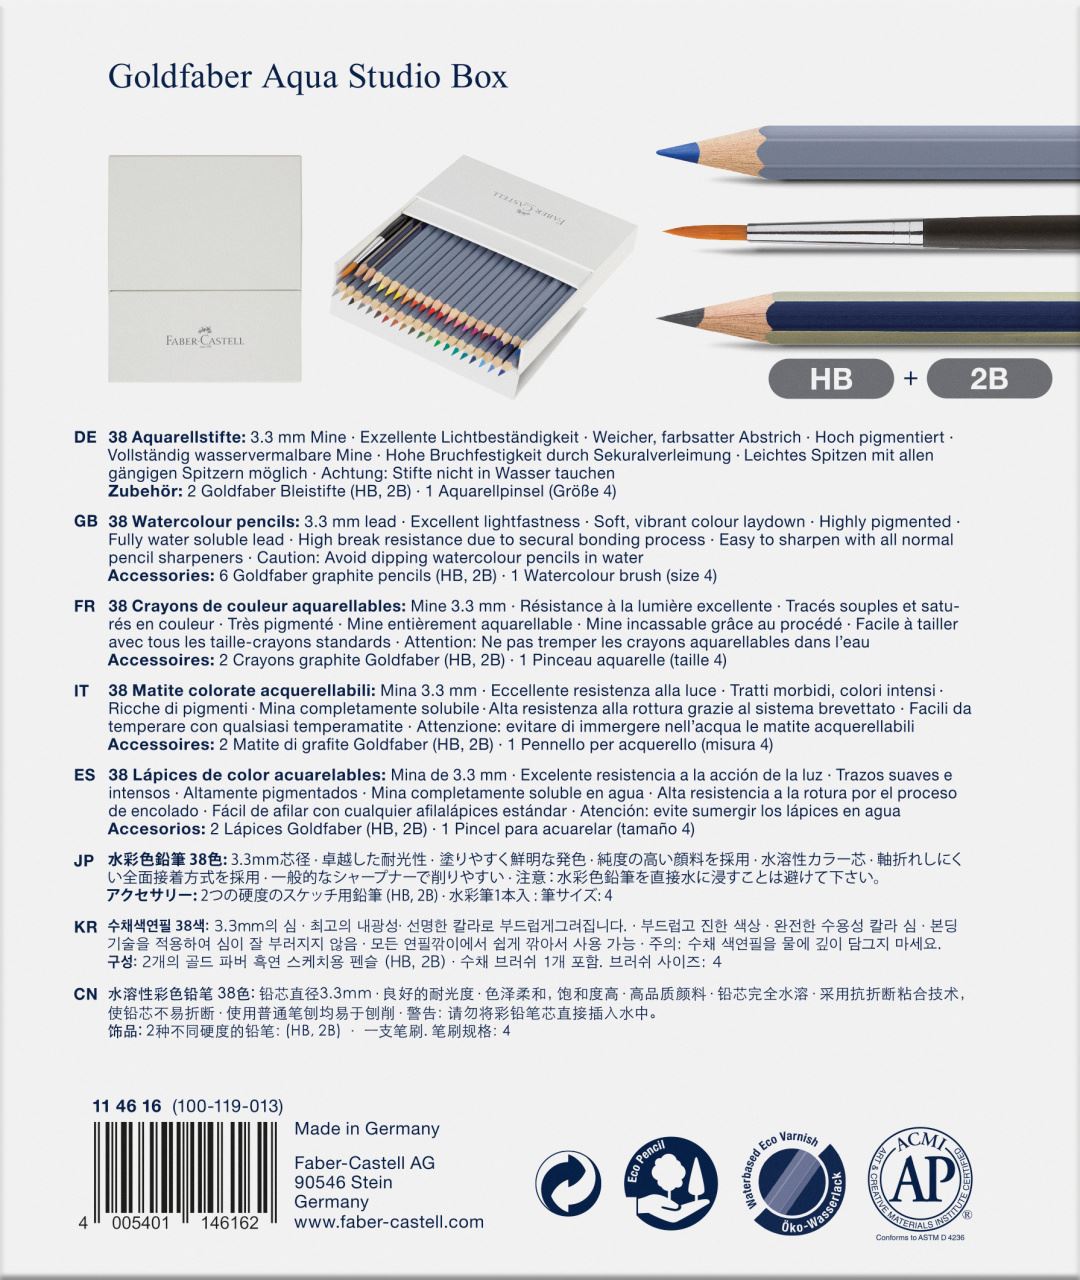 Faber-Castell - Goldfaber Aqua watercolour pencil, studio box